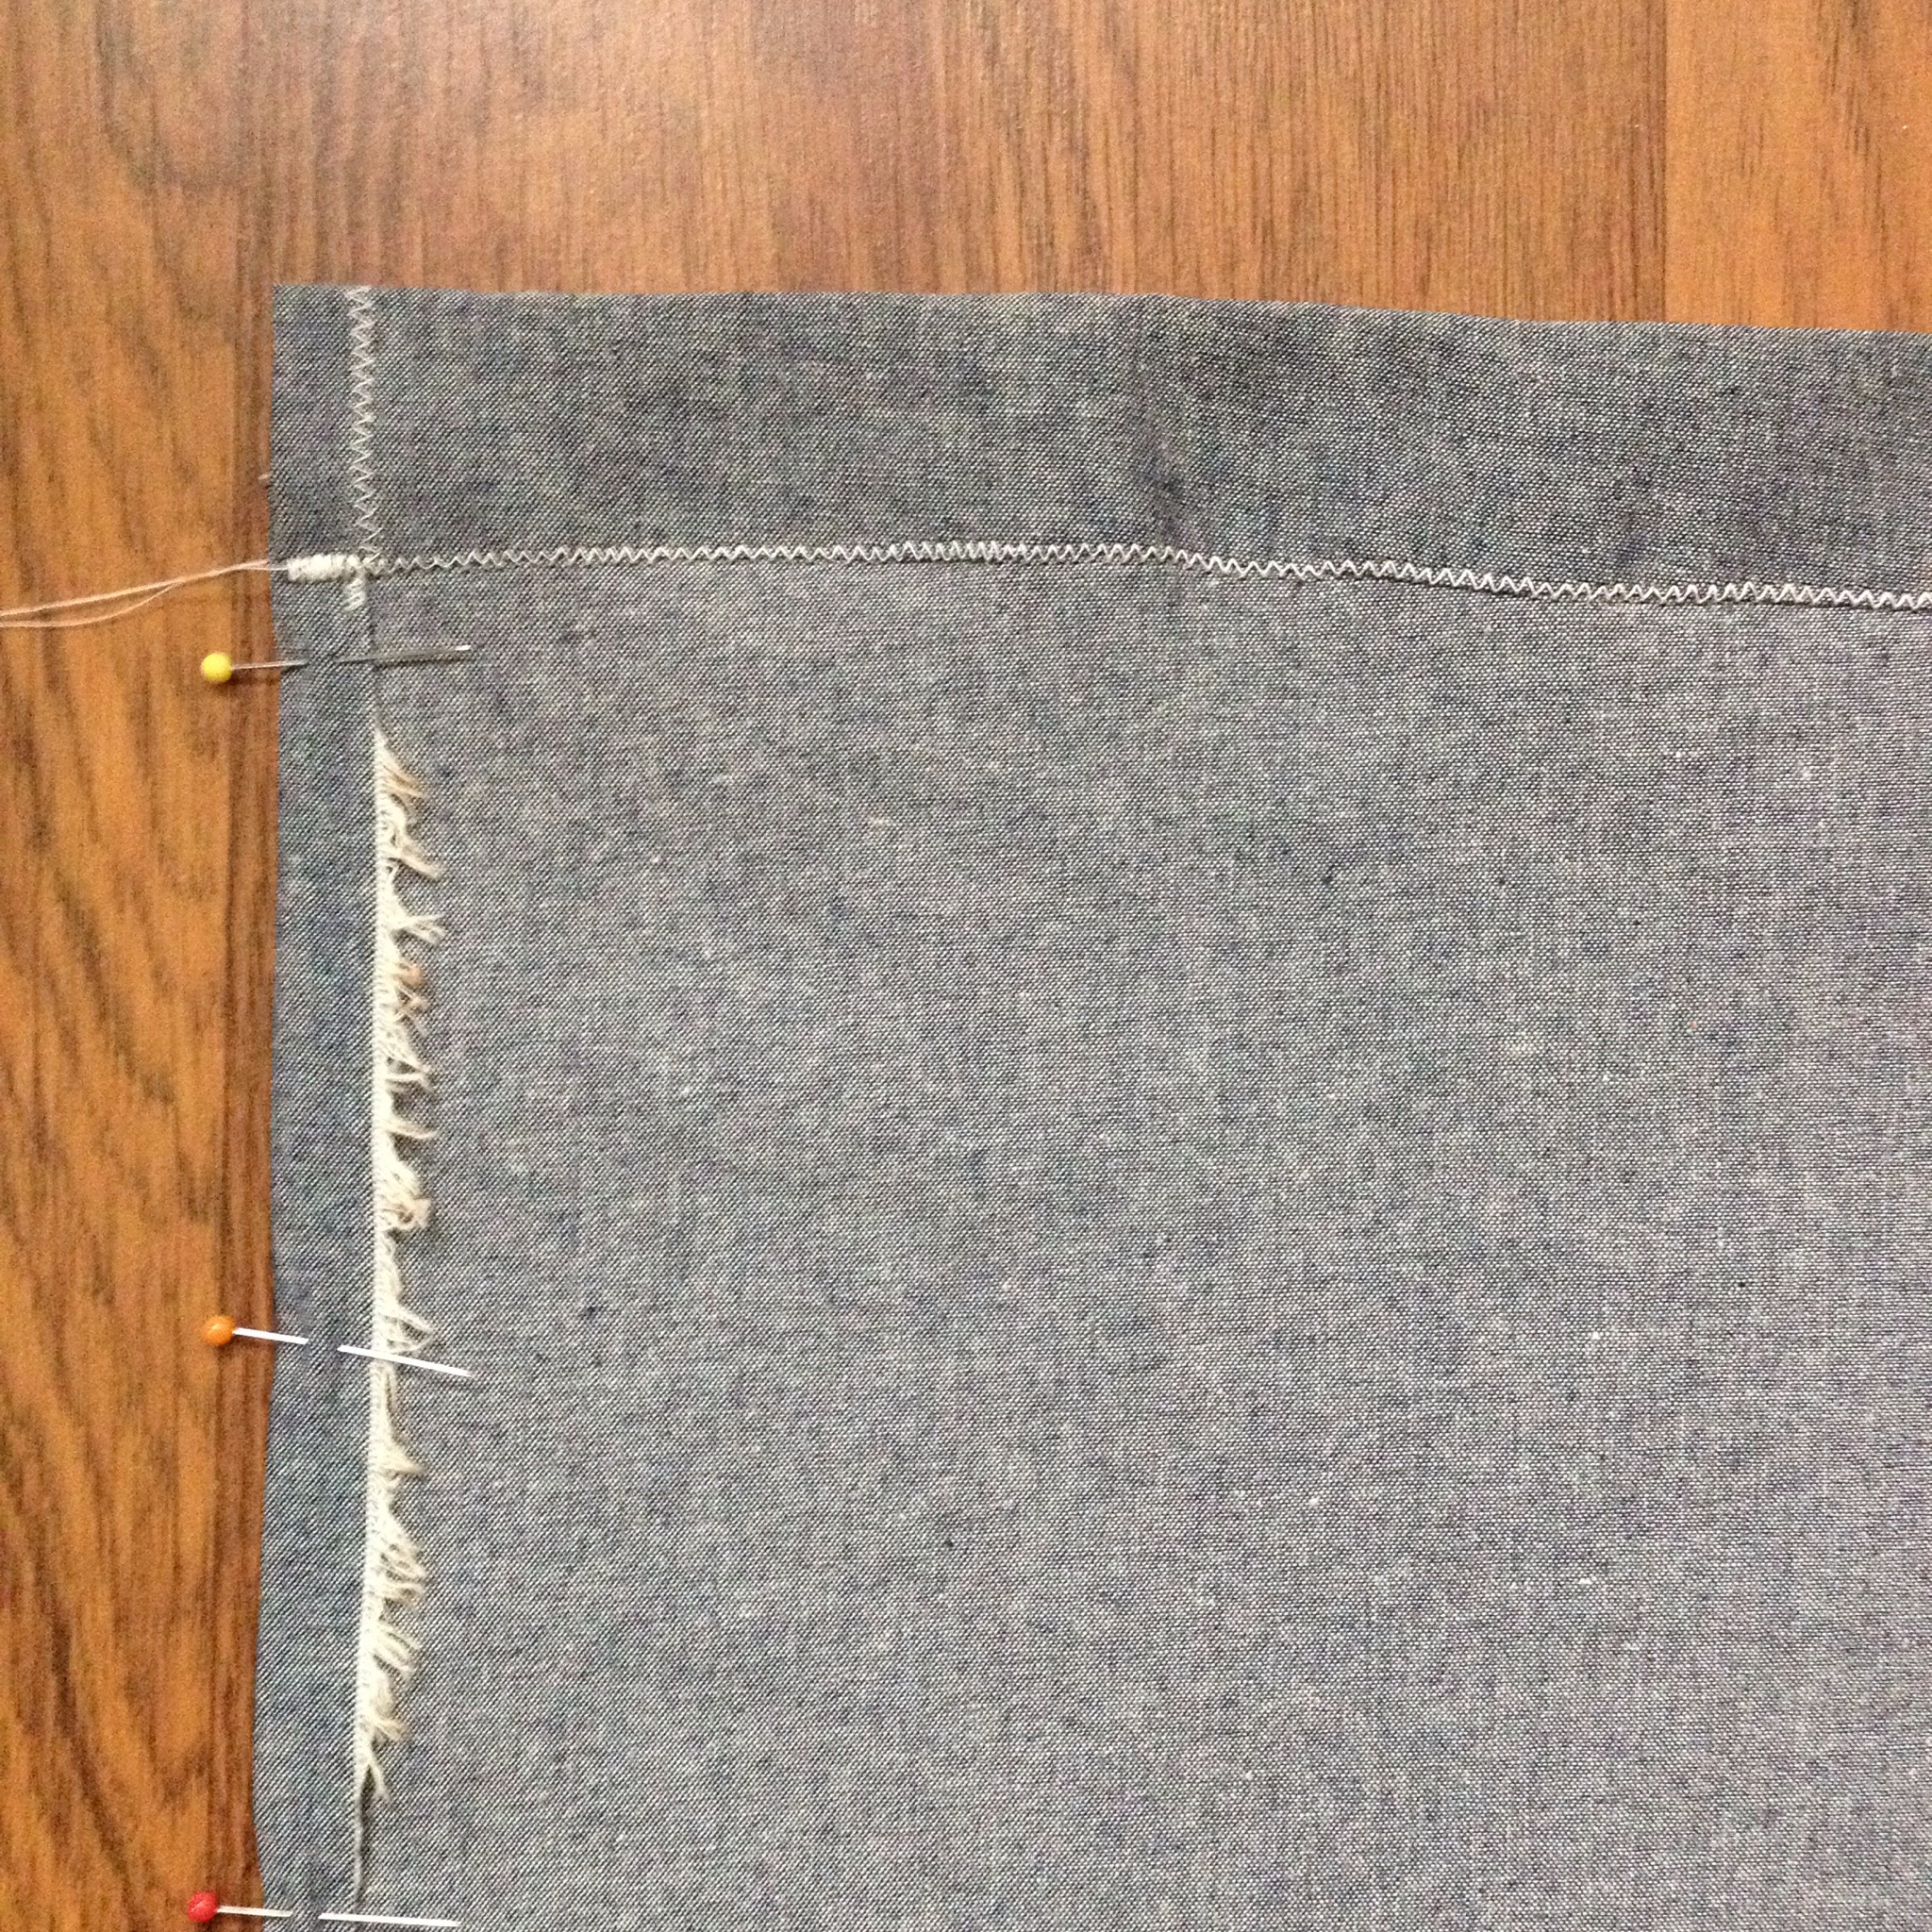 Beginners Sewing Tutorial (DIY Drawstring Bag)